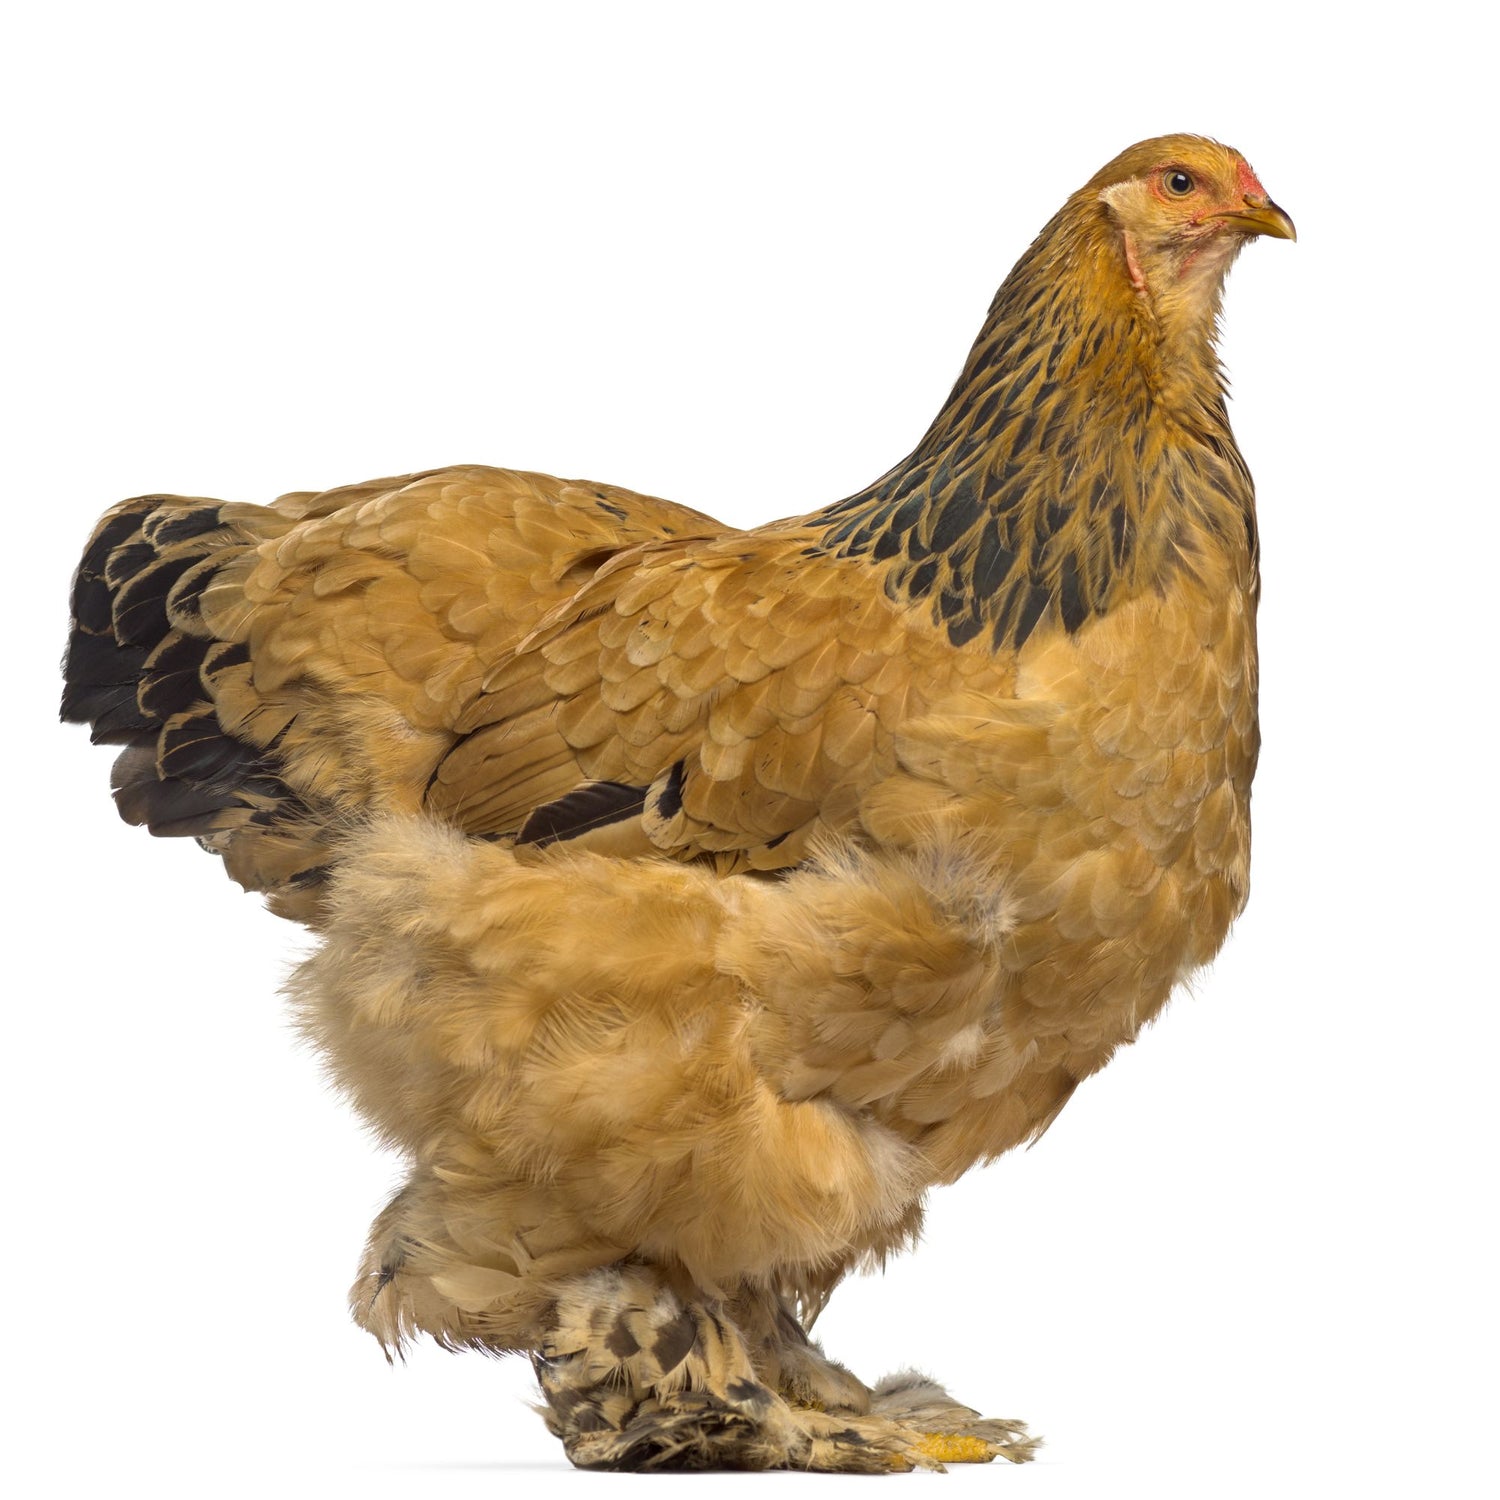 Buff Brahma chicken